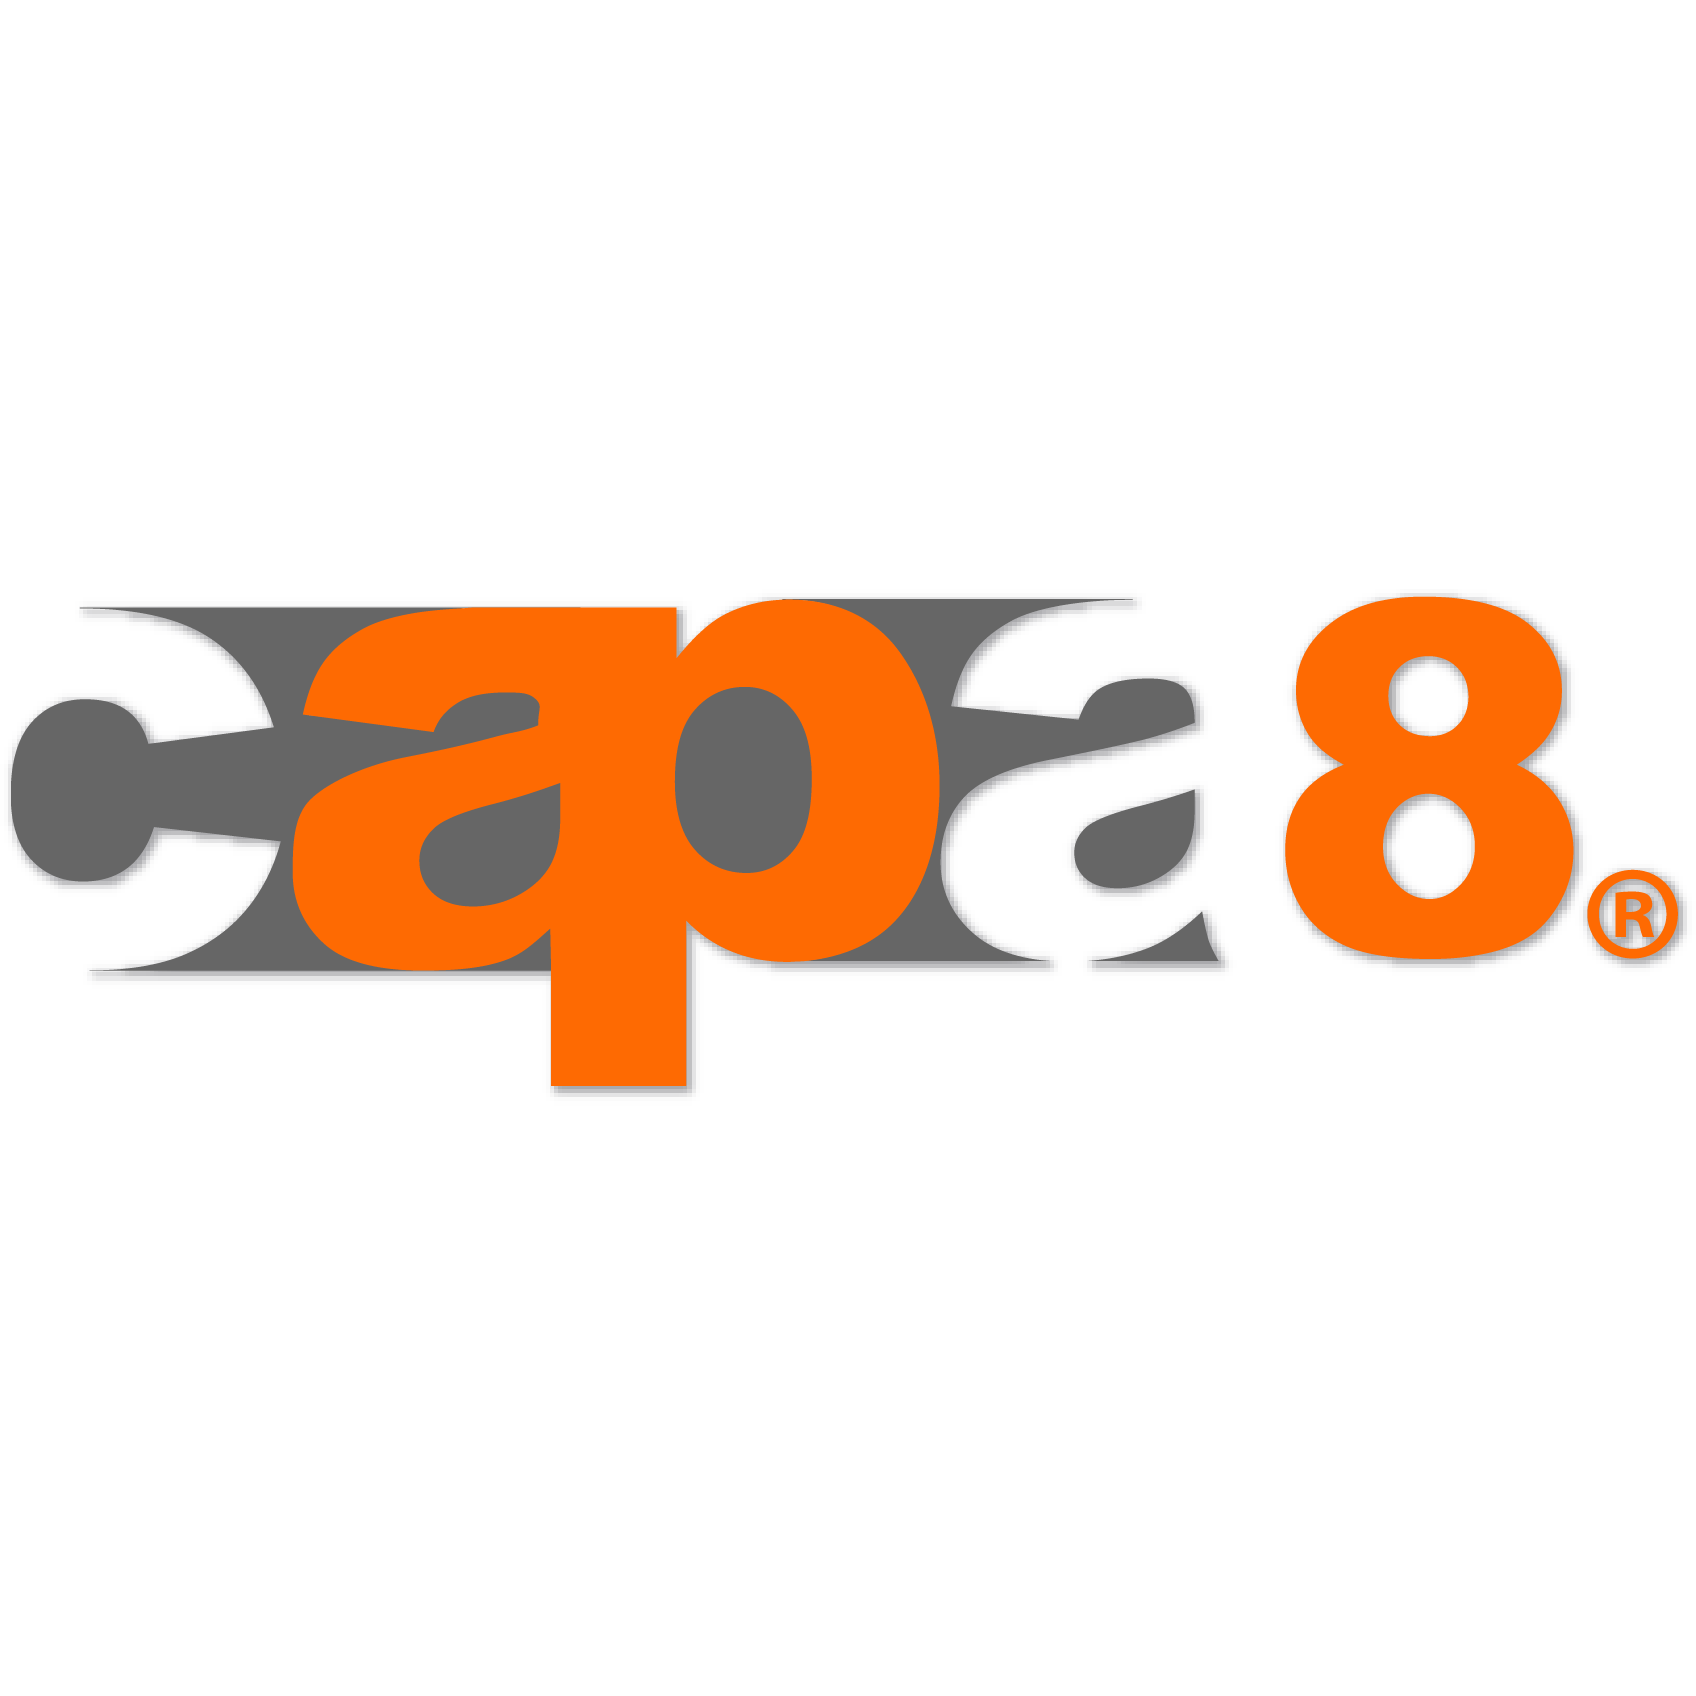 Capa8